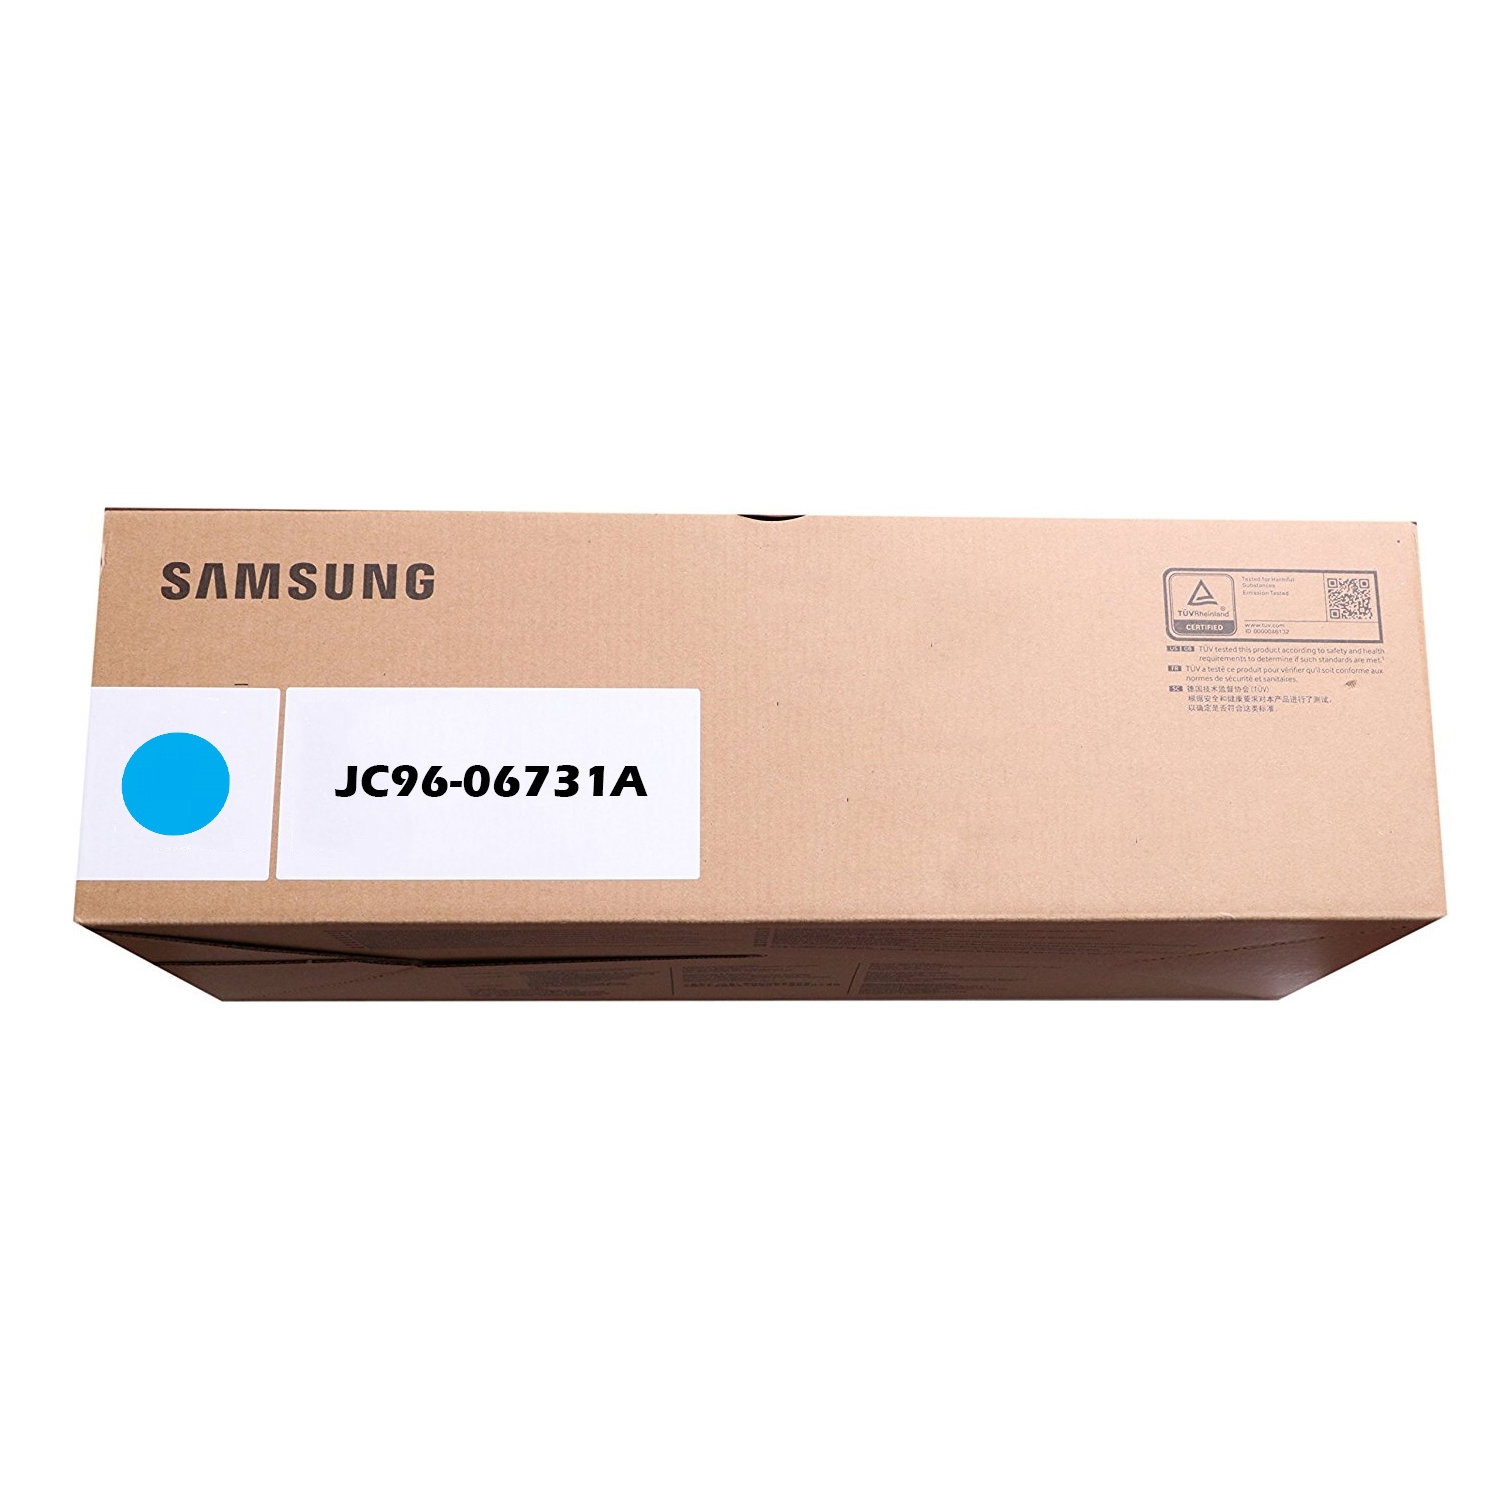 Original Samsung JC96-06221A Cyan Developer Unit (JC96-06731A)